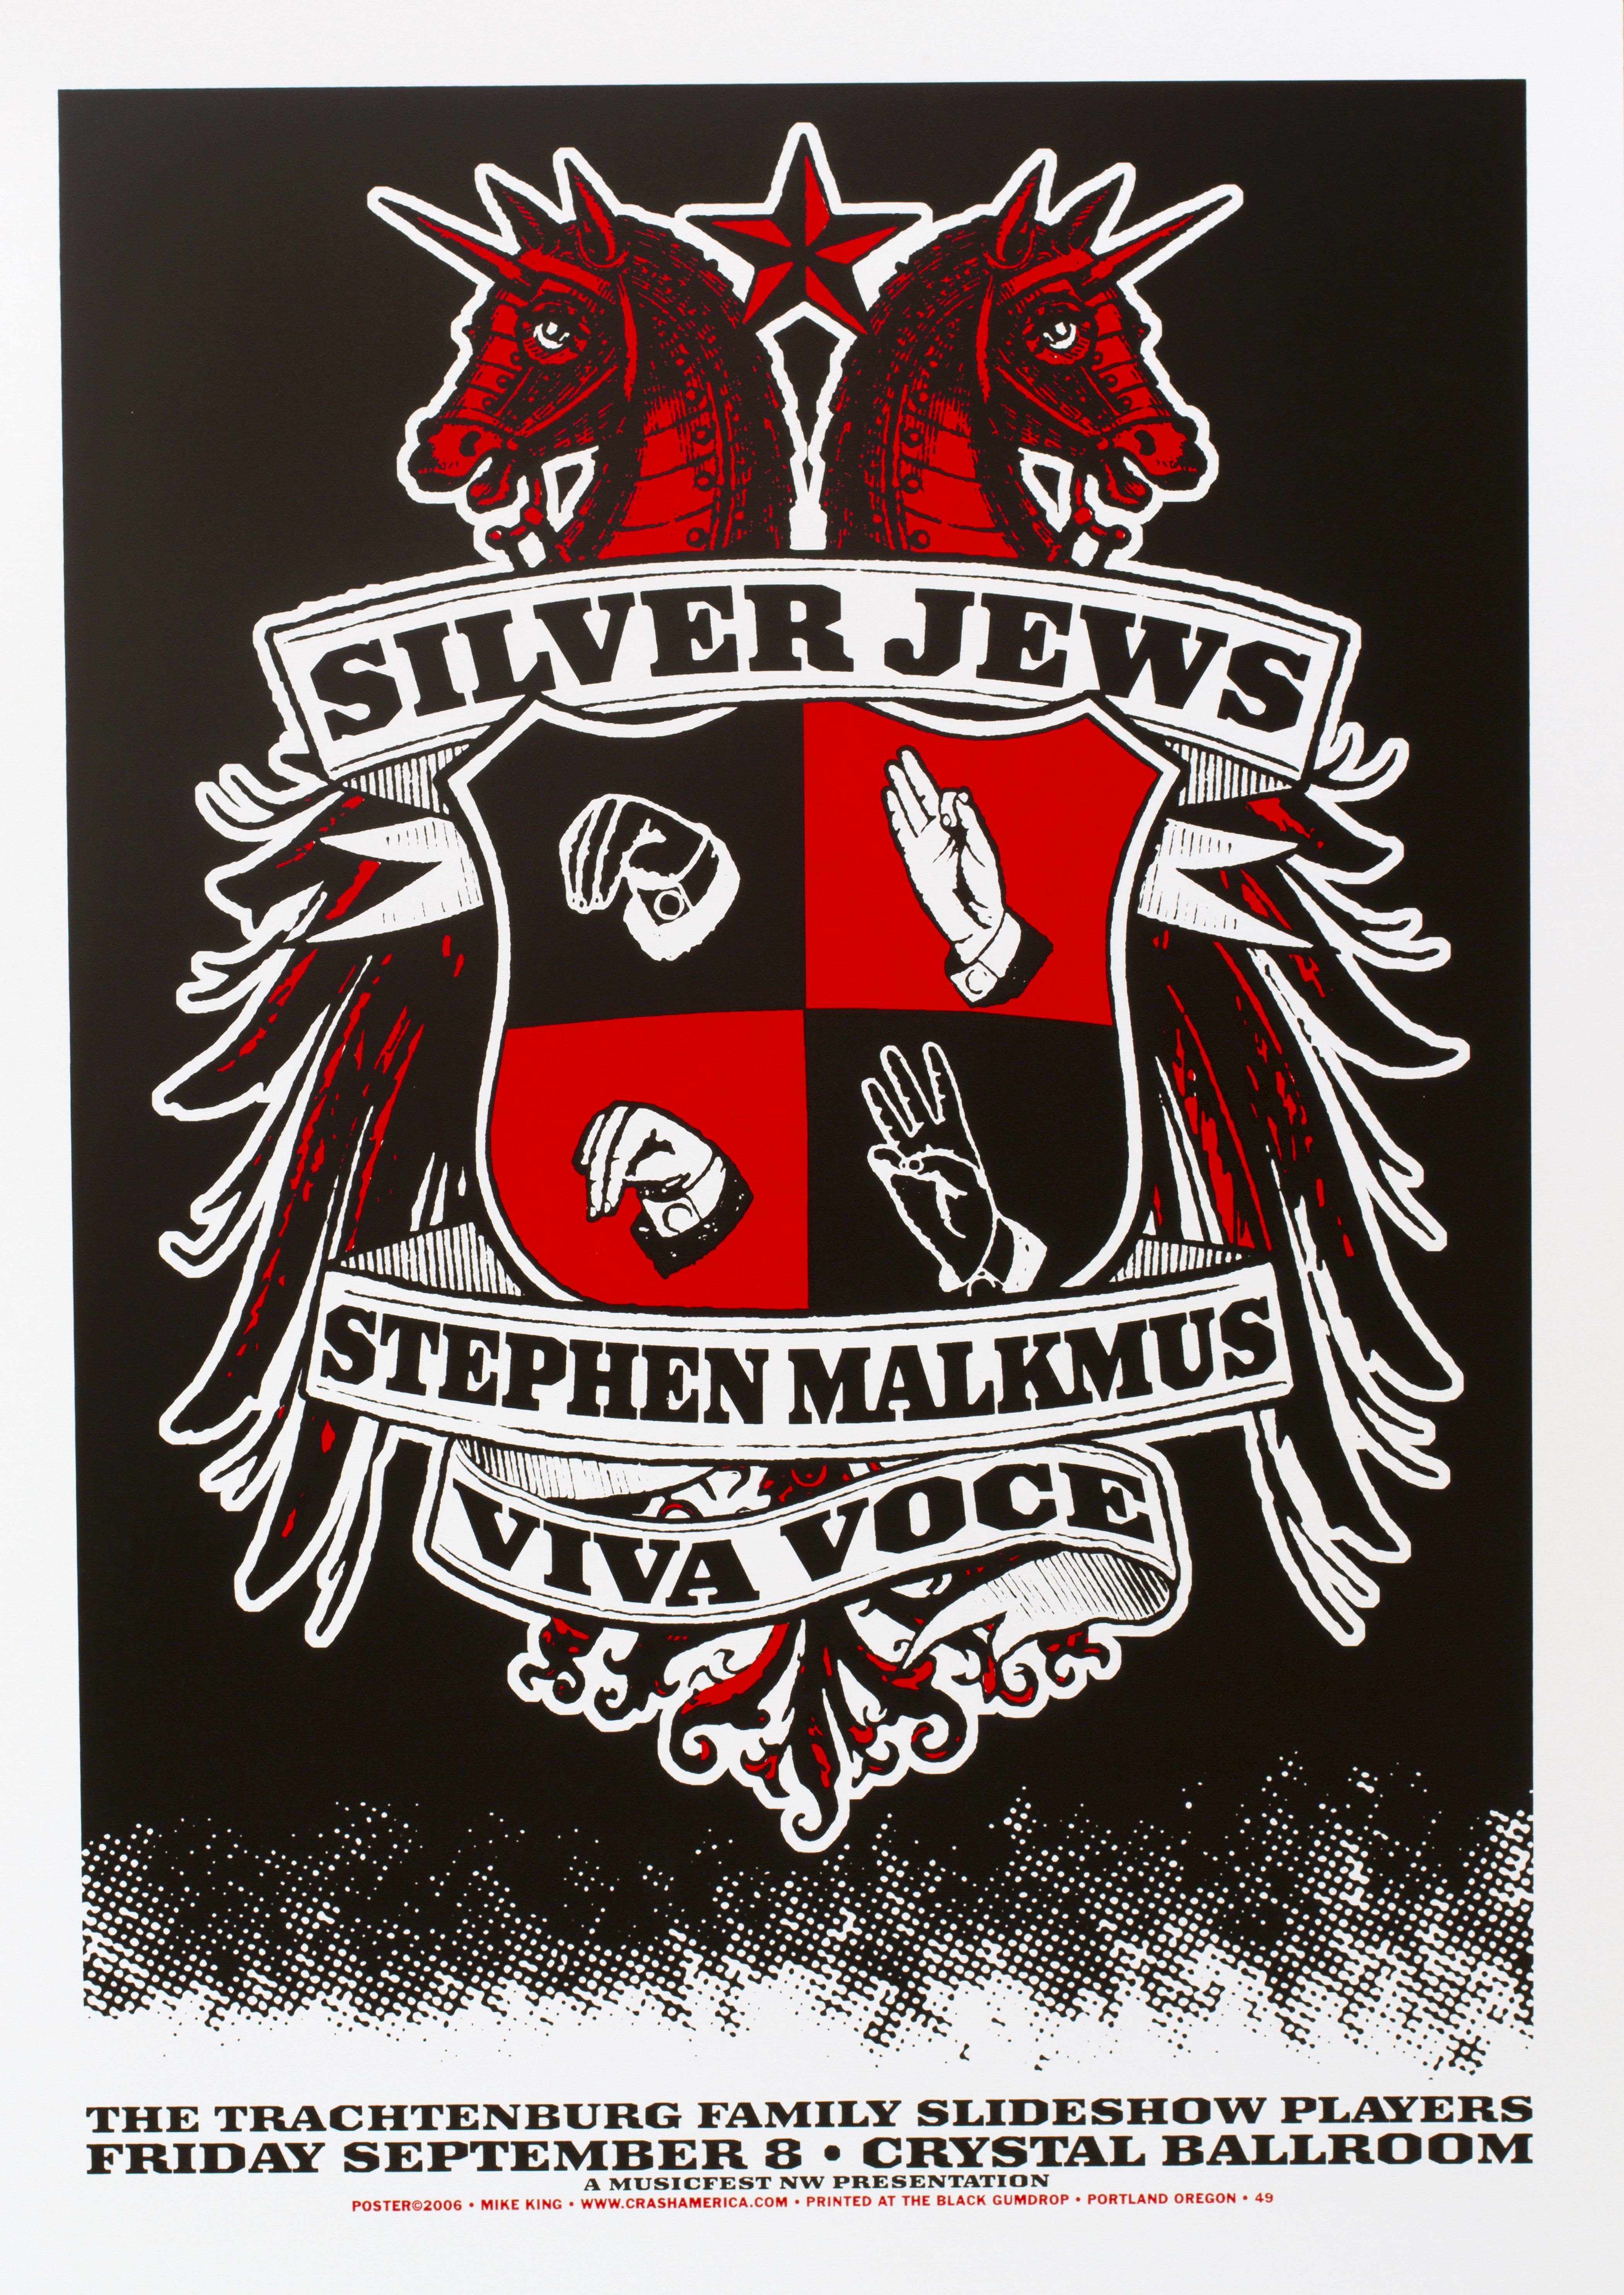 MXP-18.1 Silver Jews 2006 Crystal Ballroom  Sep 8 Concert Poster